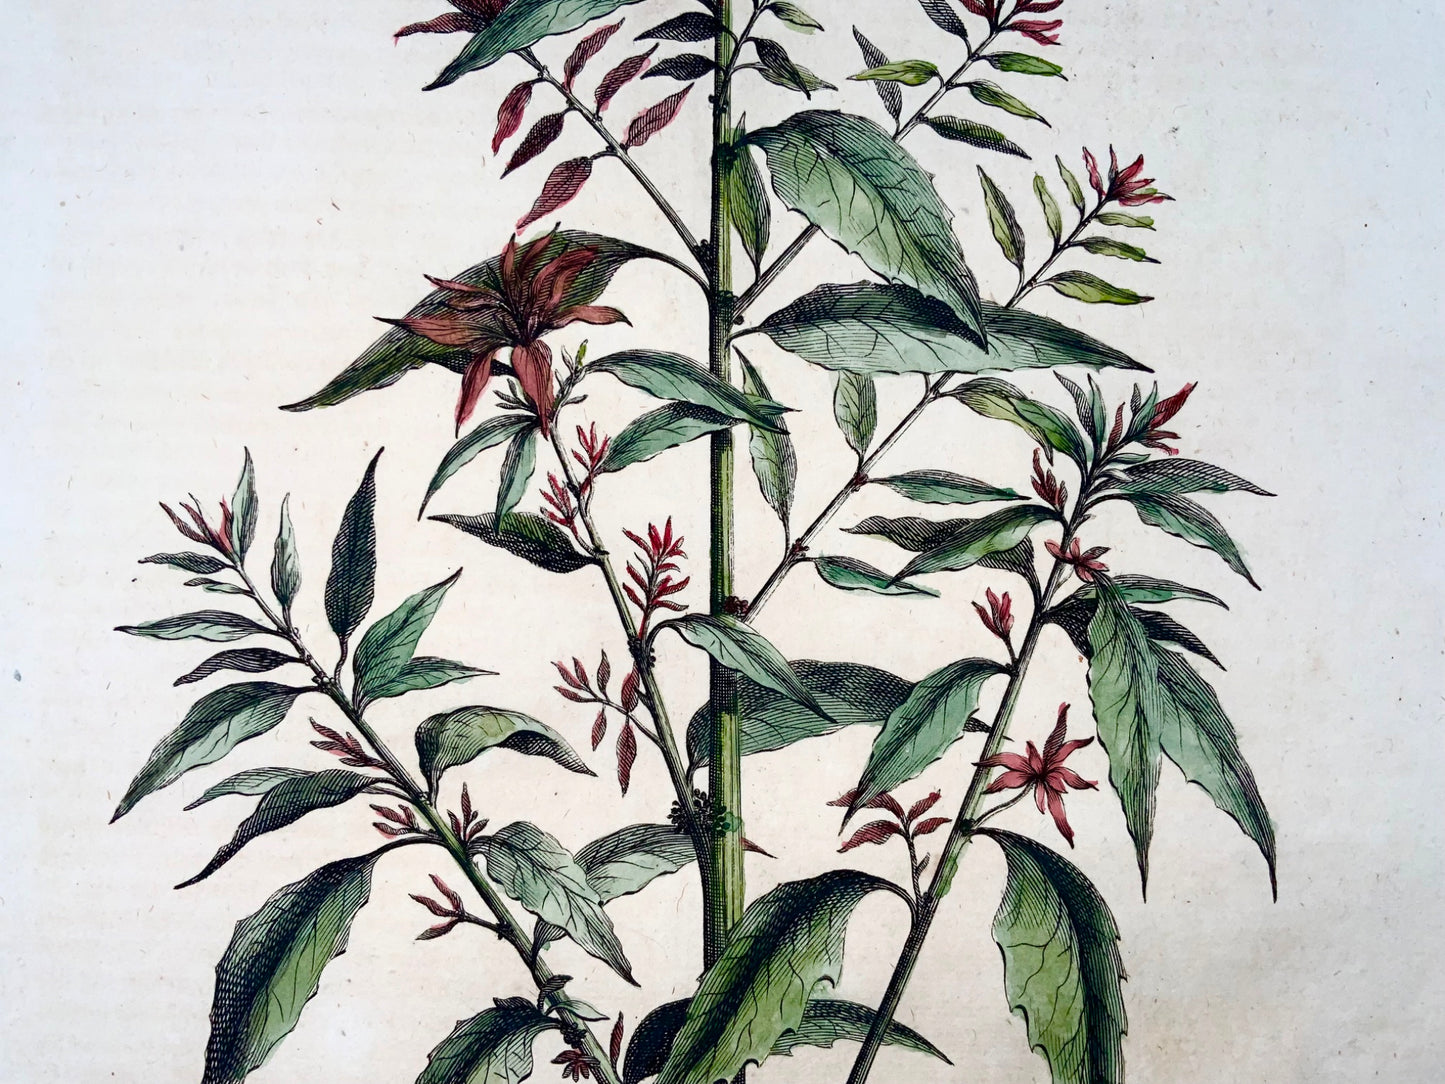 1696 Ambrosia mexicana, grand folio, botanique, Abraham Munting, grand folio